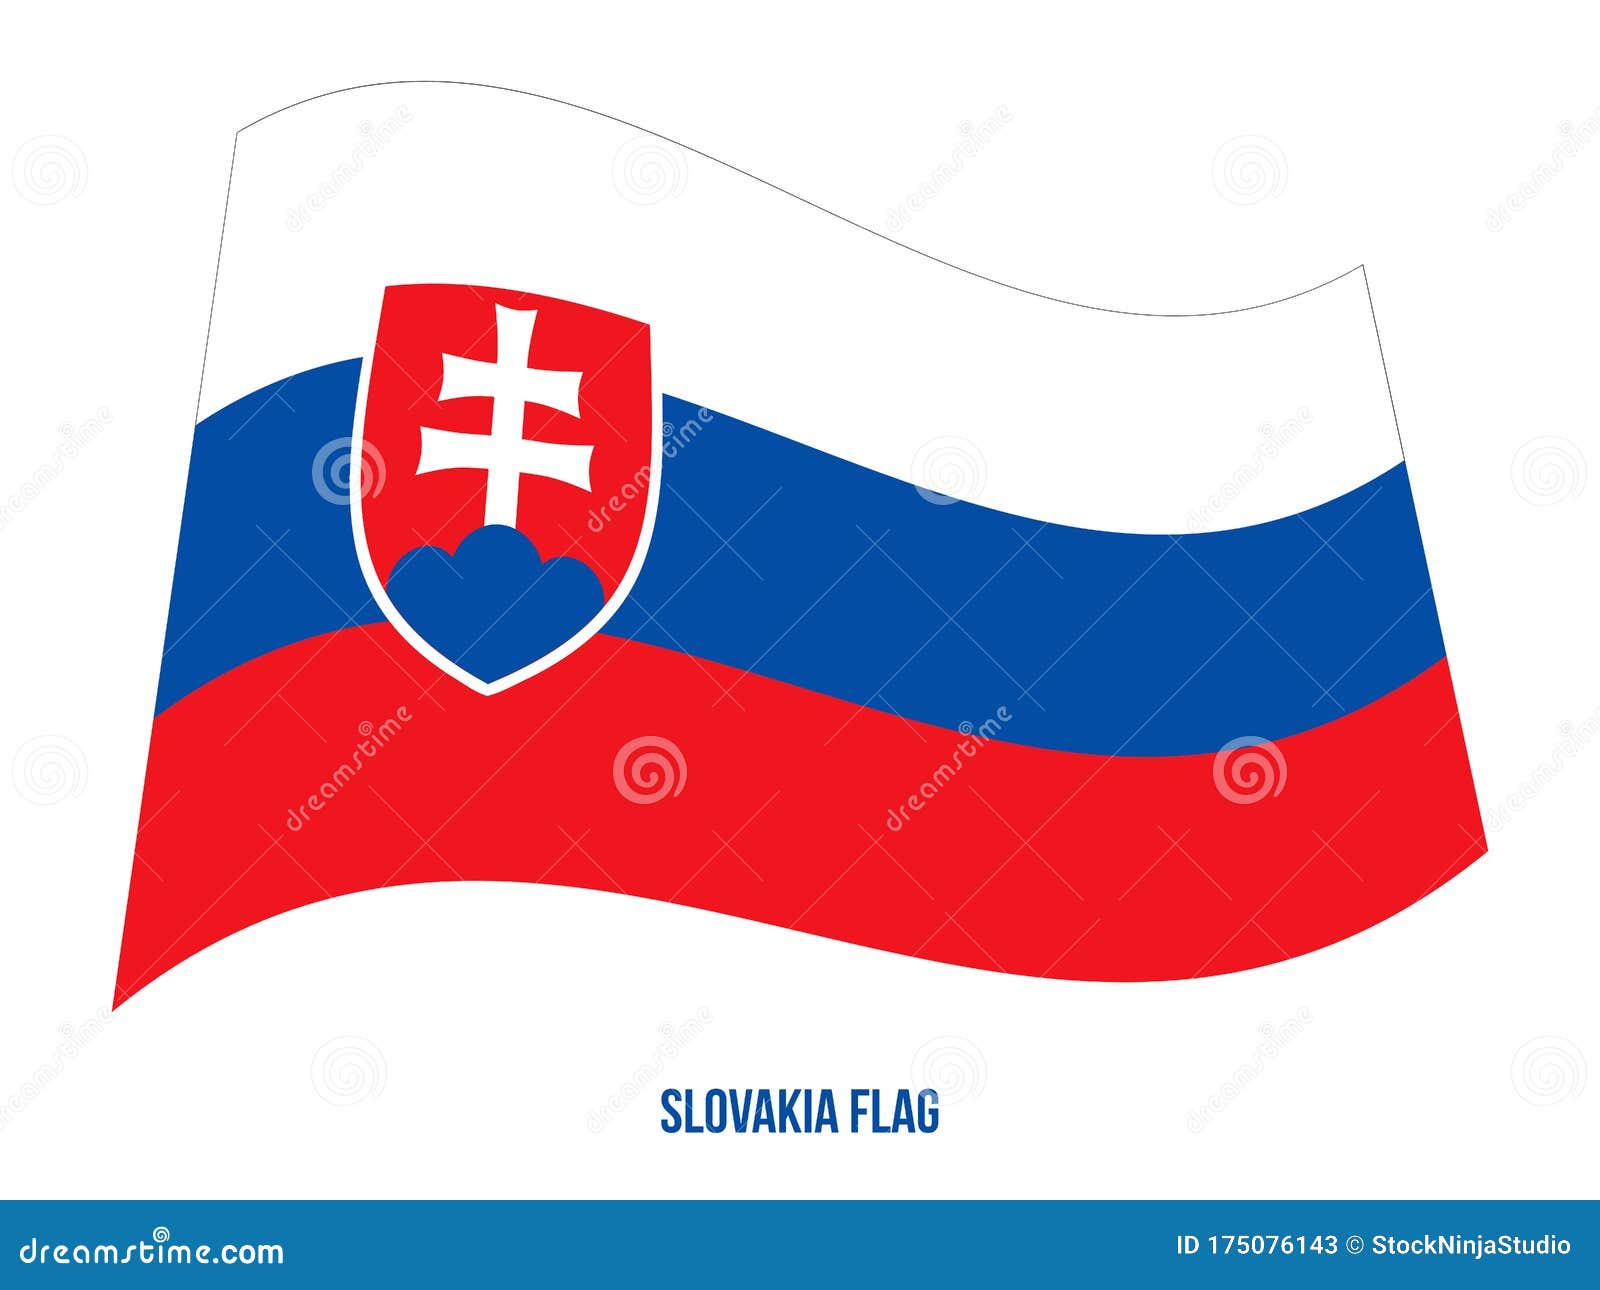 Slovakia Flag Waving Vector Illustration On White Background Slovakia National Flag Stock Vector Illustration Of Independence Patriotism 175076143